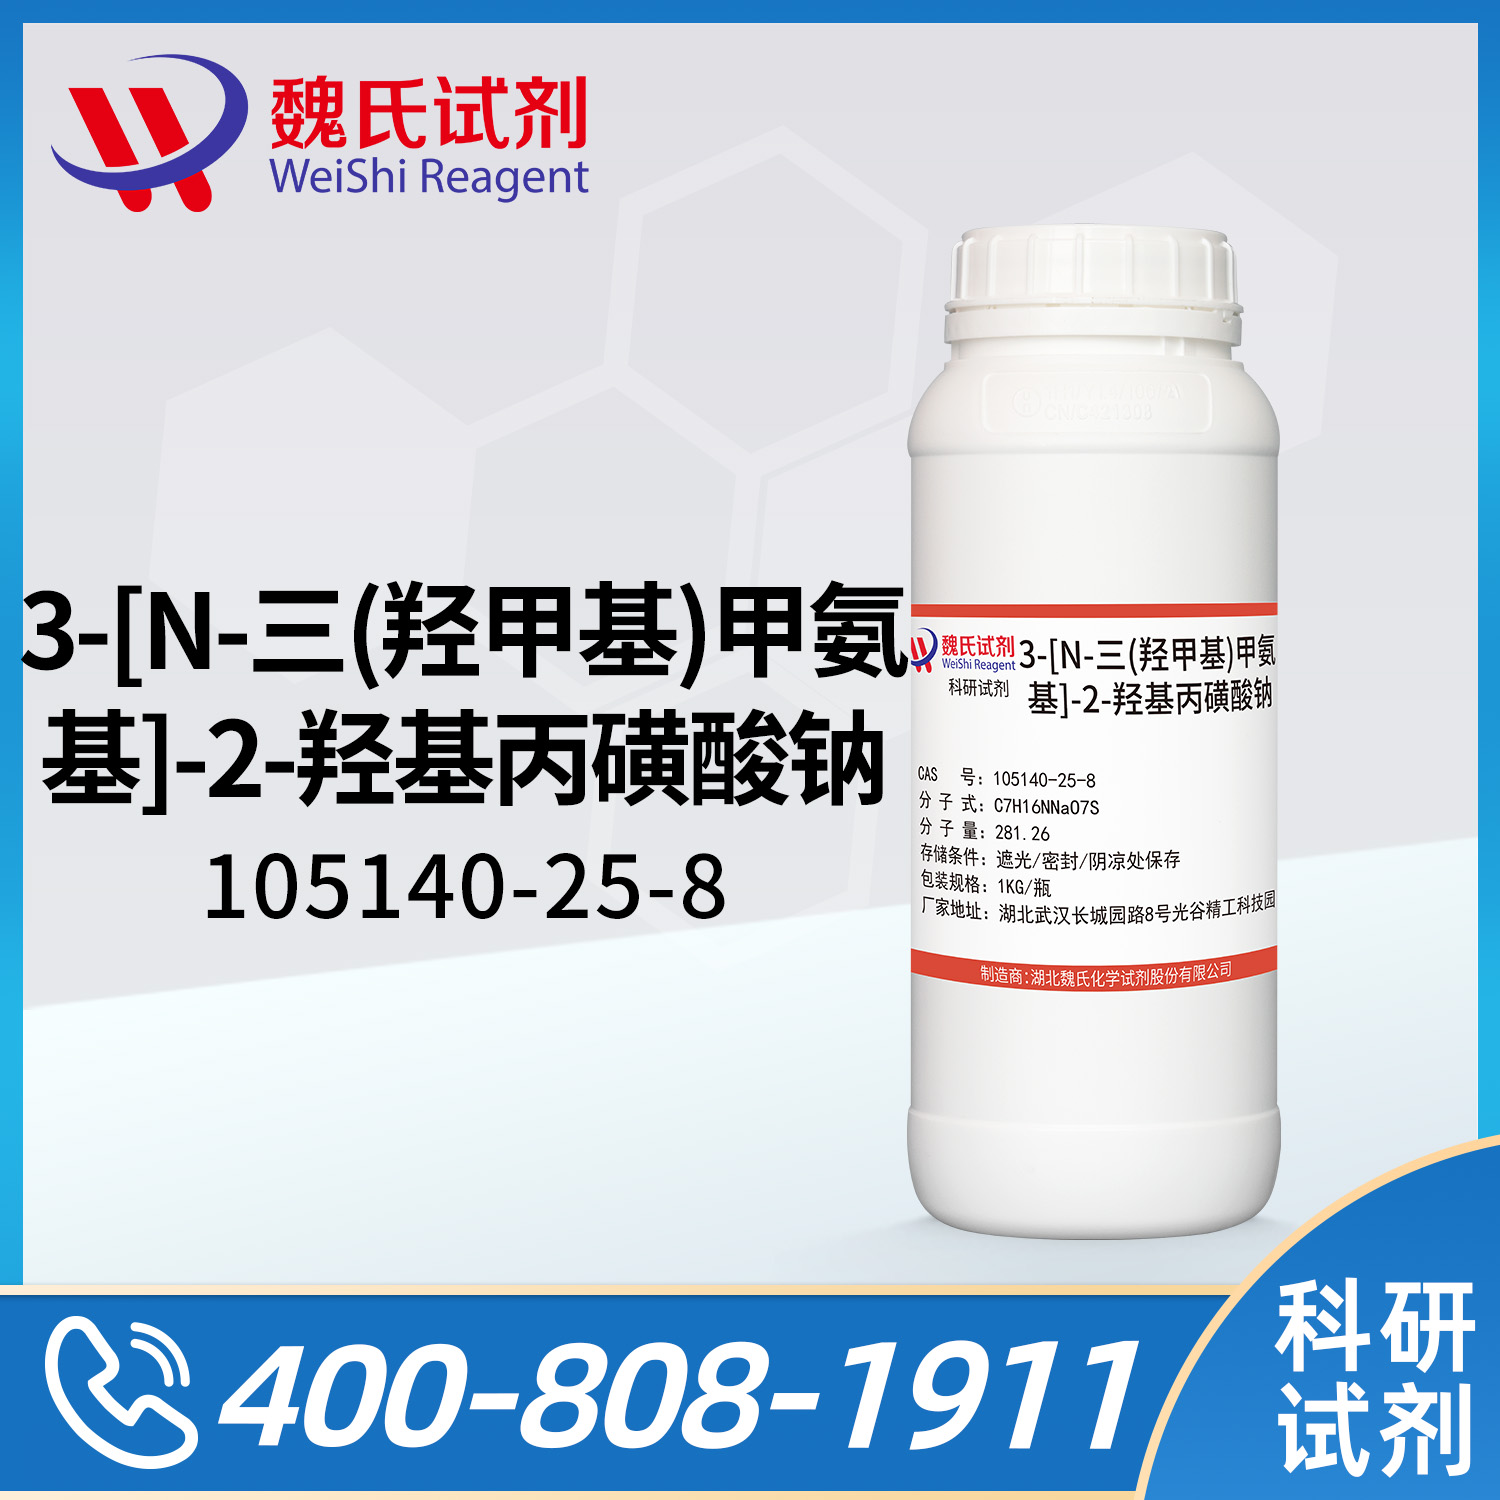 3-[N-Tris(hydroxymethyl)methylamino]-2-hydroxypropanesulfonic acid sodium salt